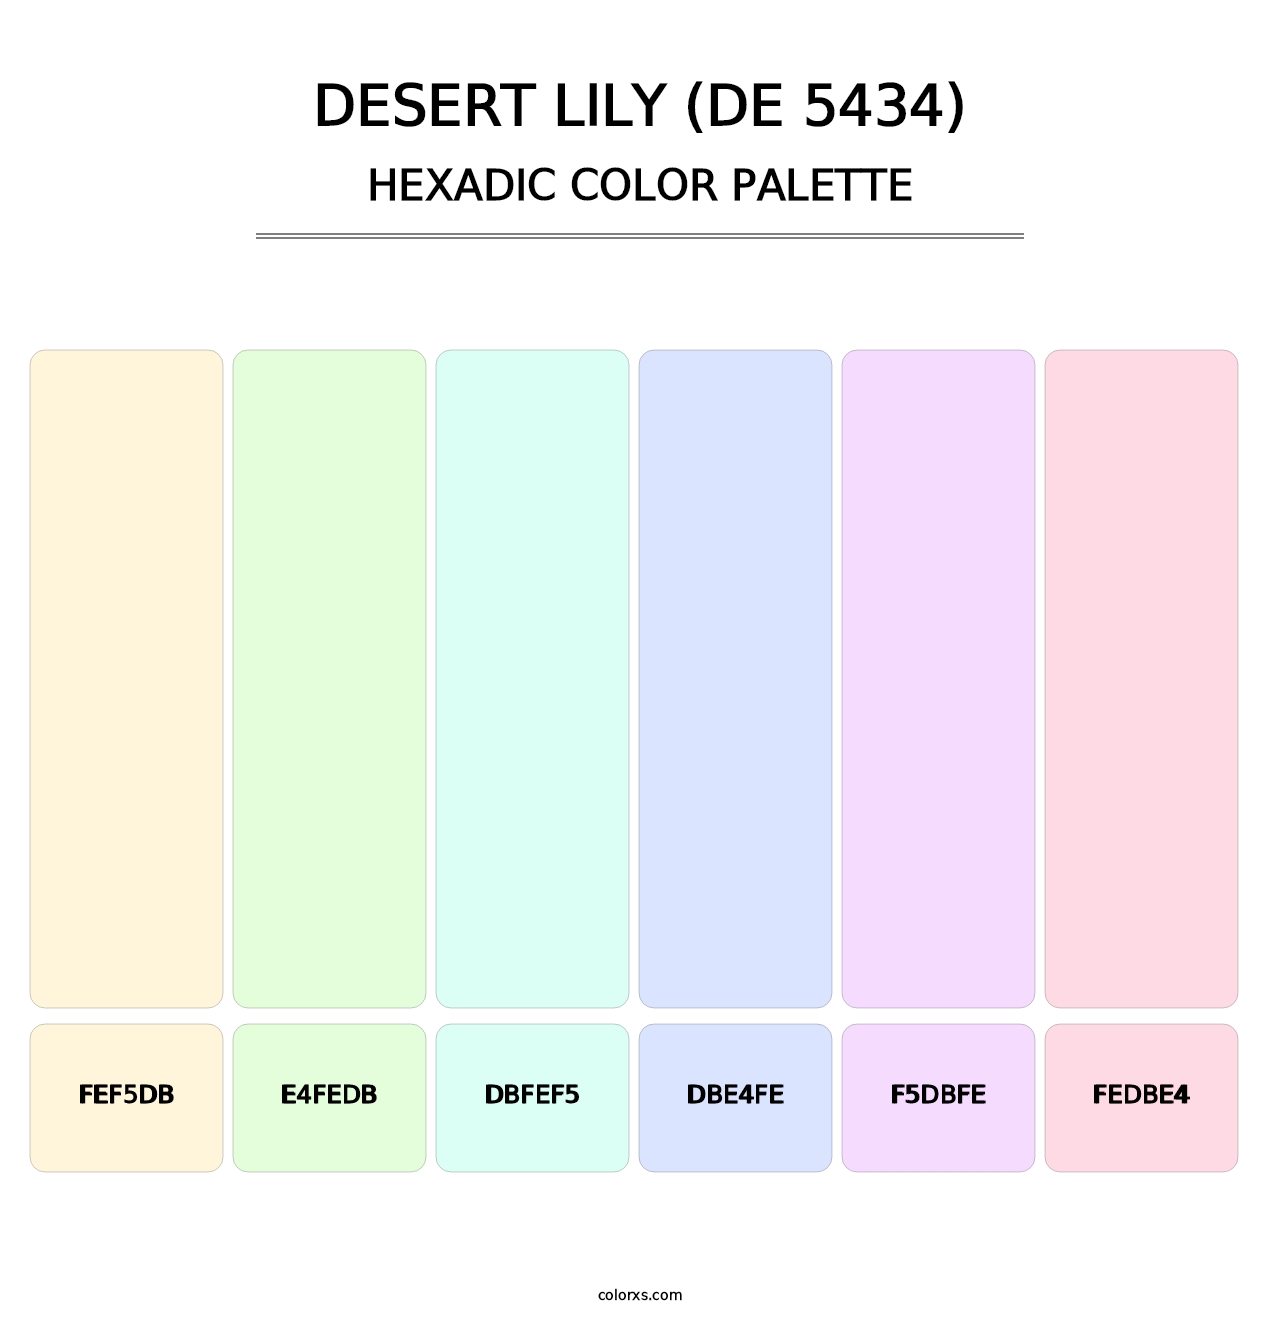 Desert Lily (DE 5434) - Hexadic Color Palette